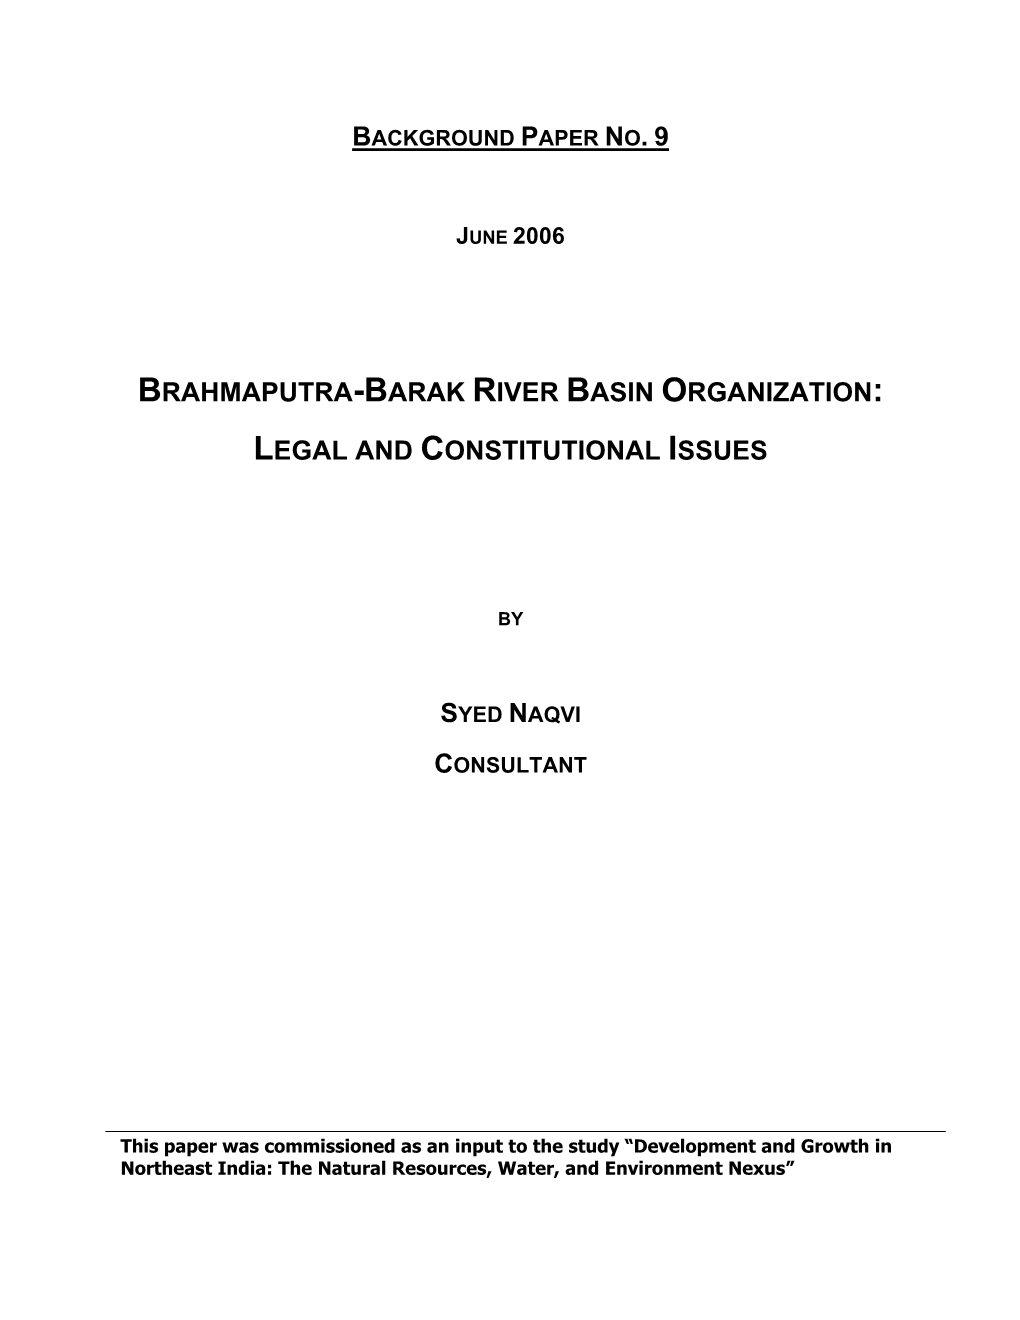 Brahmaputra-Barak River Basin Organization